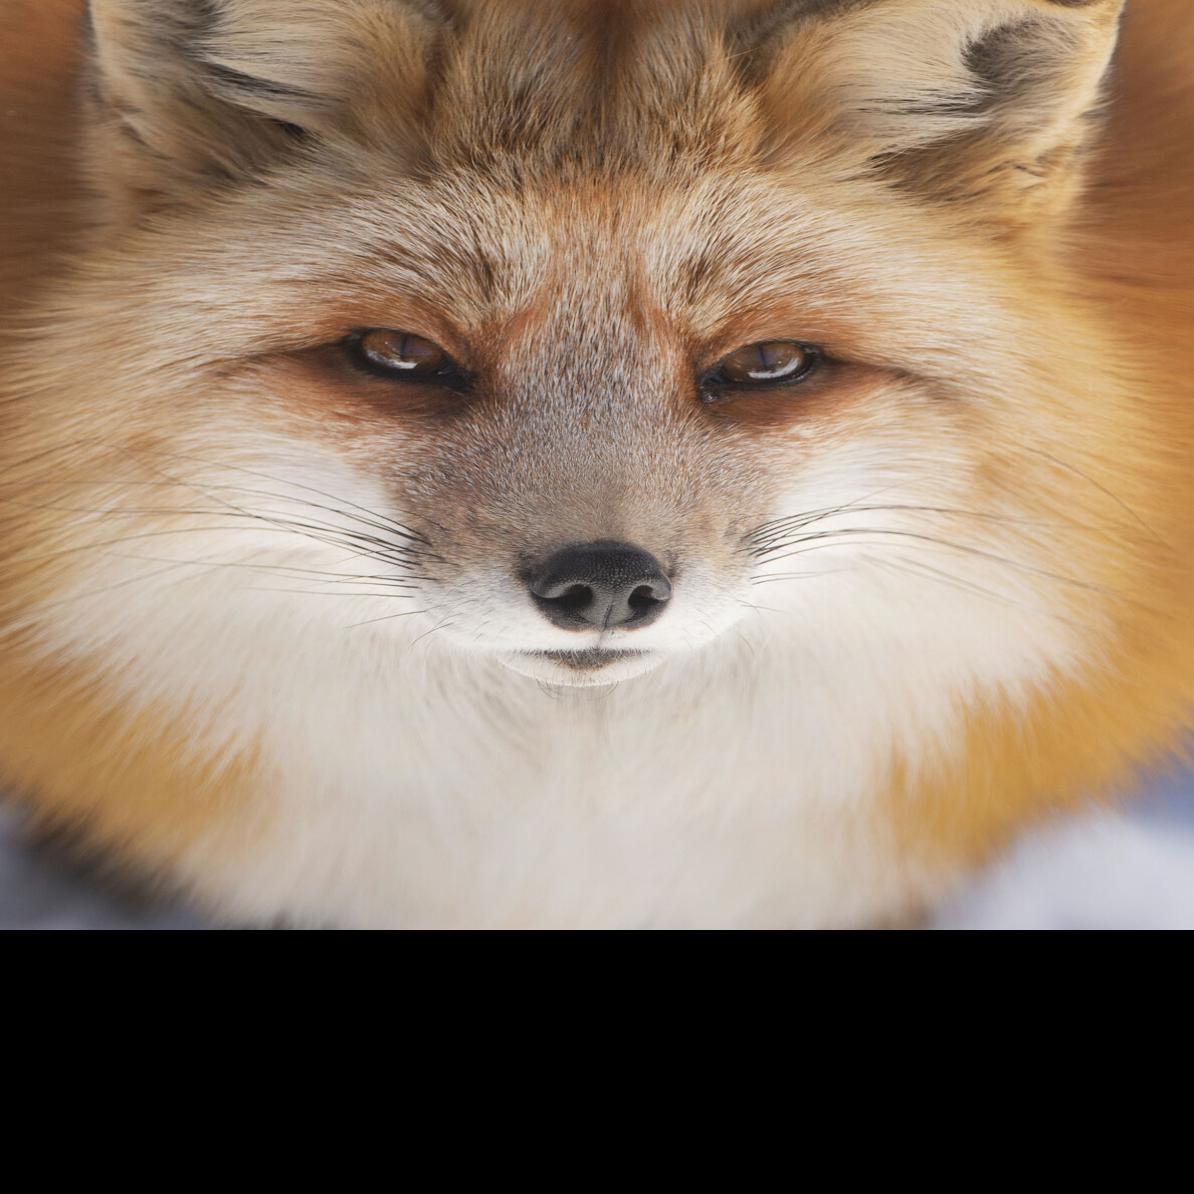 Fun fox facts, Wildlife in the News